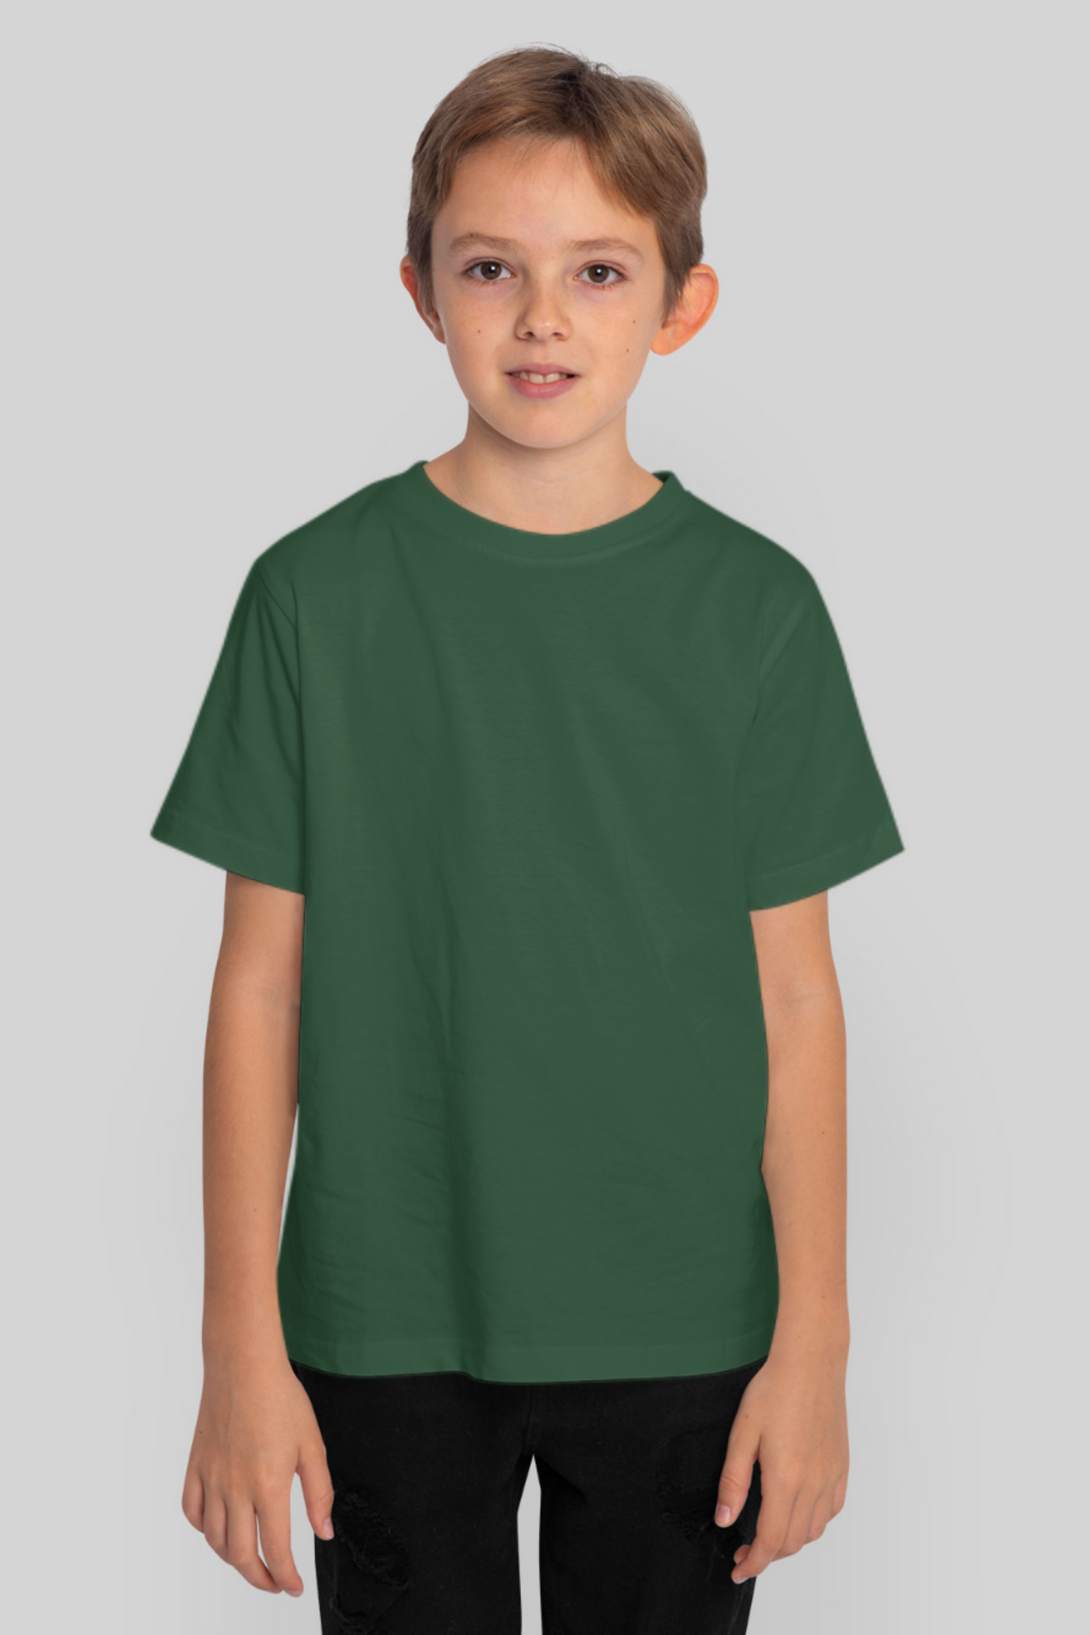 Bottle Green T-Shirt For Boy - WowWaves - 1